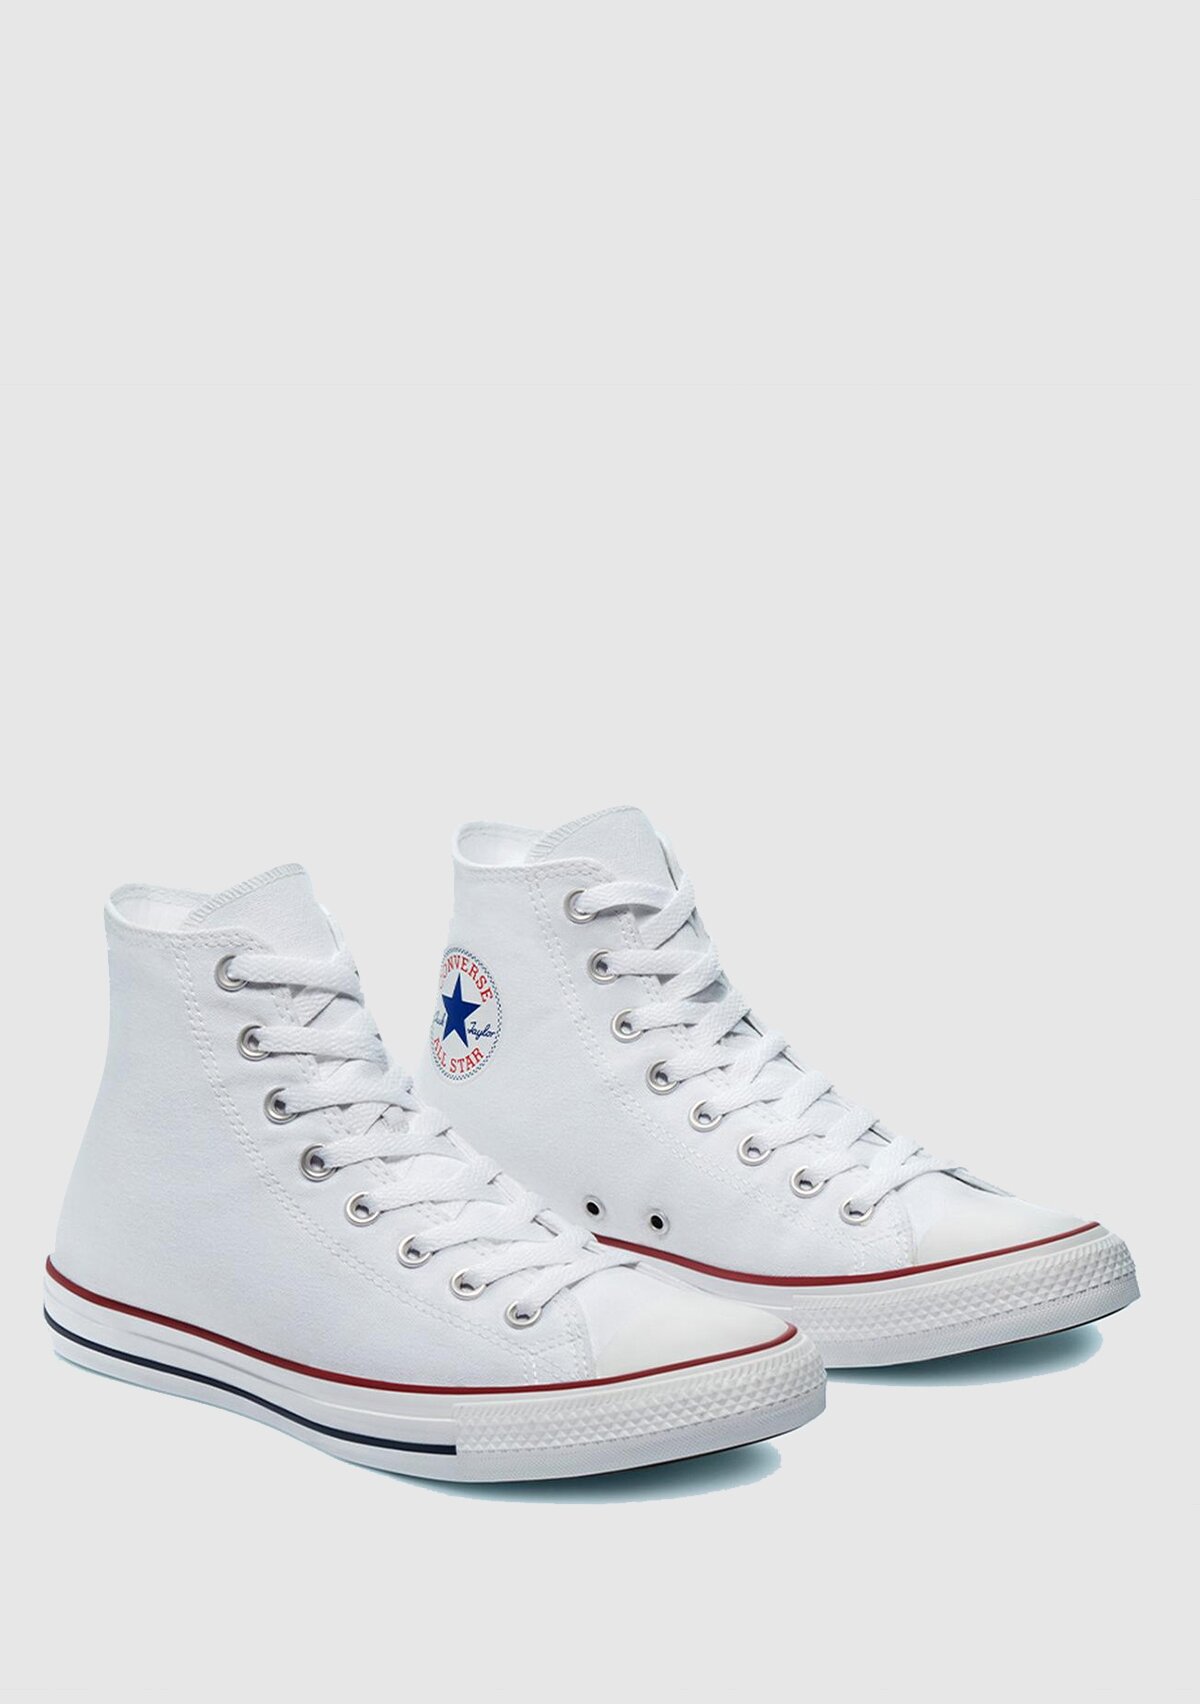 Converse Chuck Taylor All Star Beyaz Unisex Sneaker M7650C